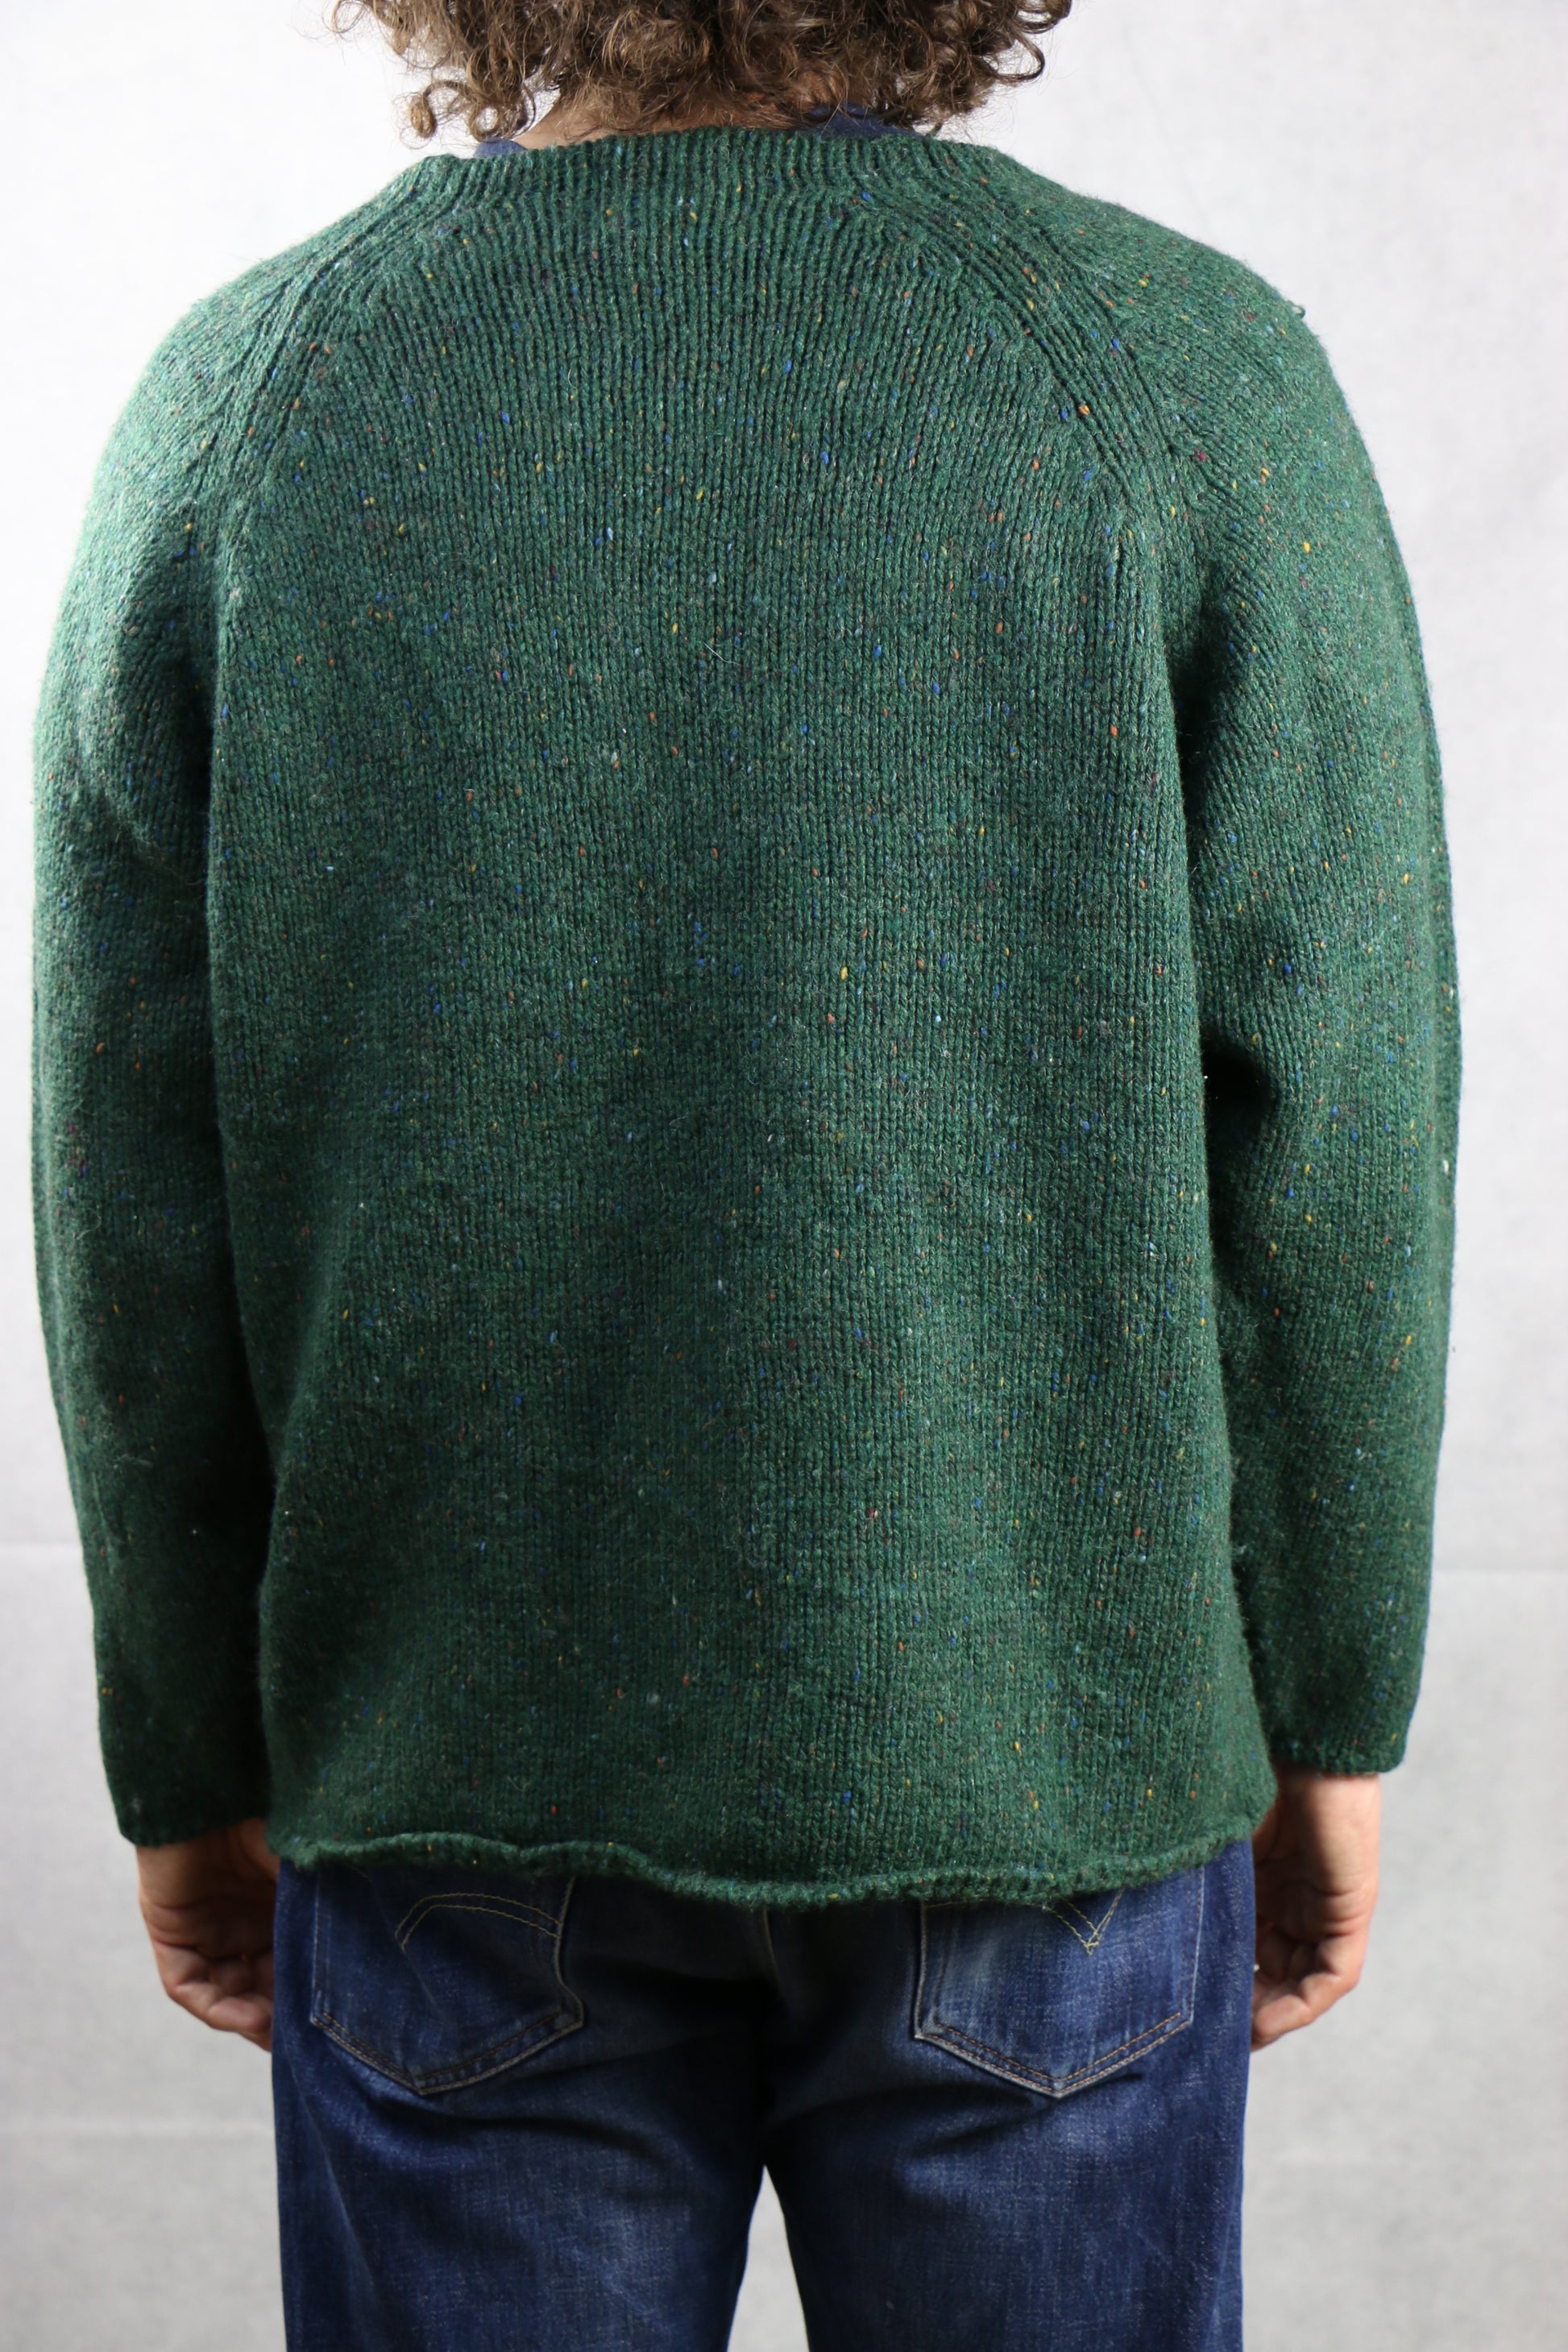 Woolrich Green Sweater - vintage clothing clochard92.com